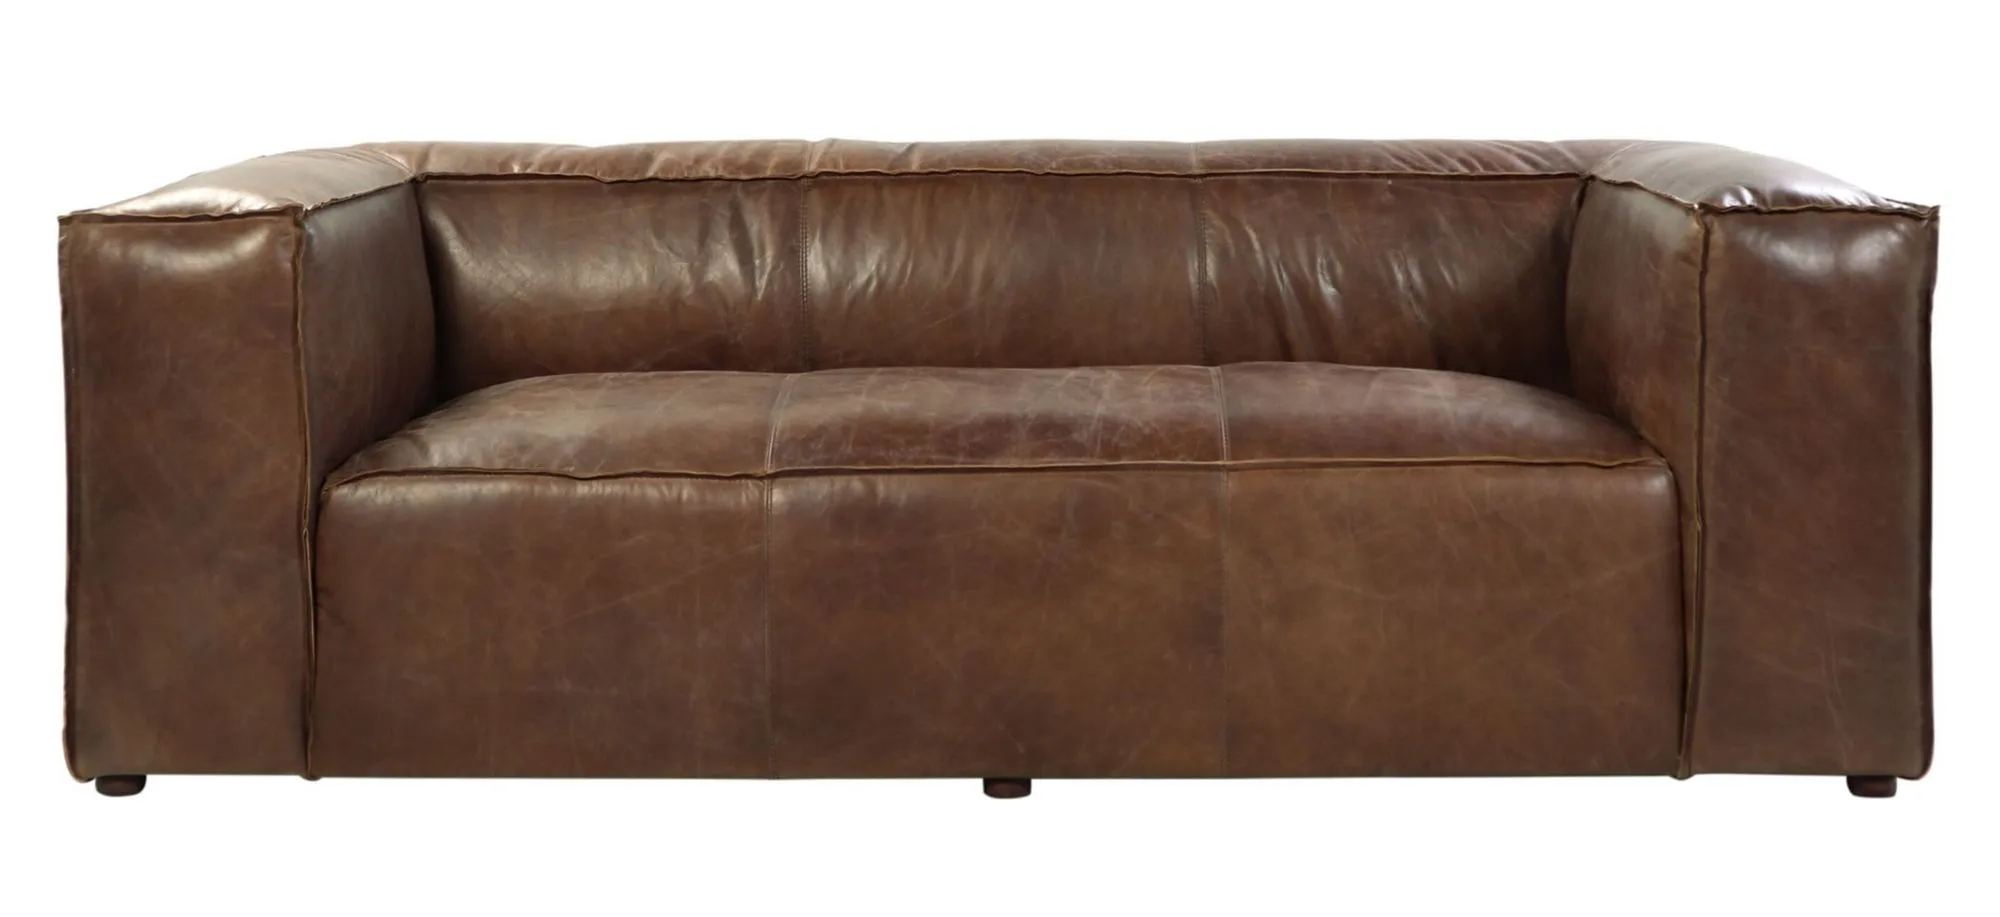 Gotvik Sofa in Brown by HomeRoots